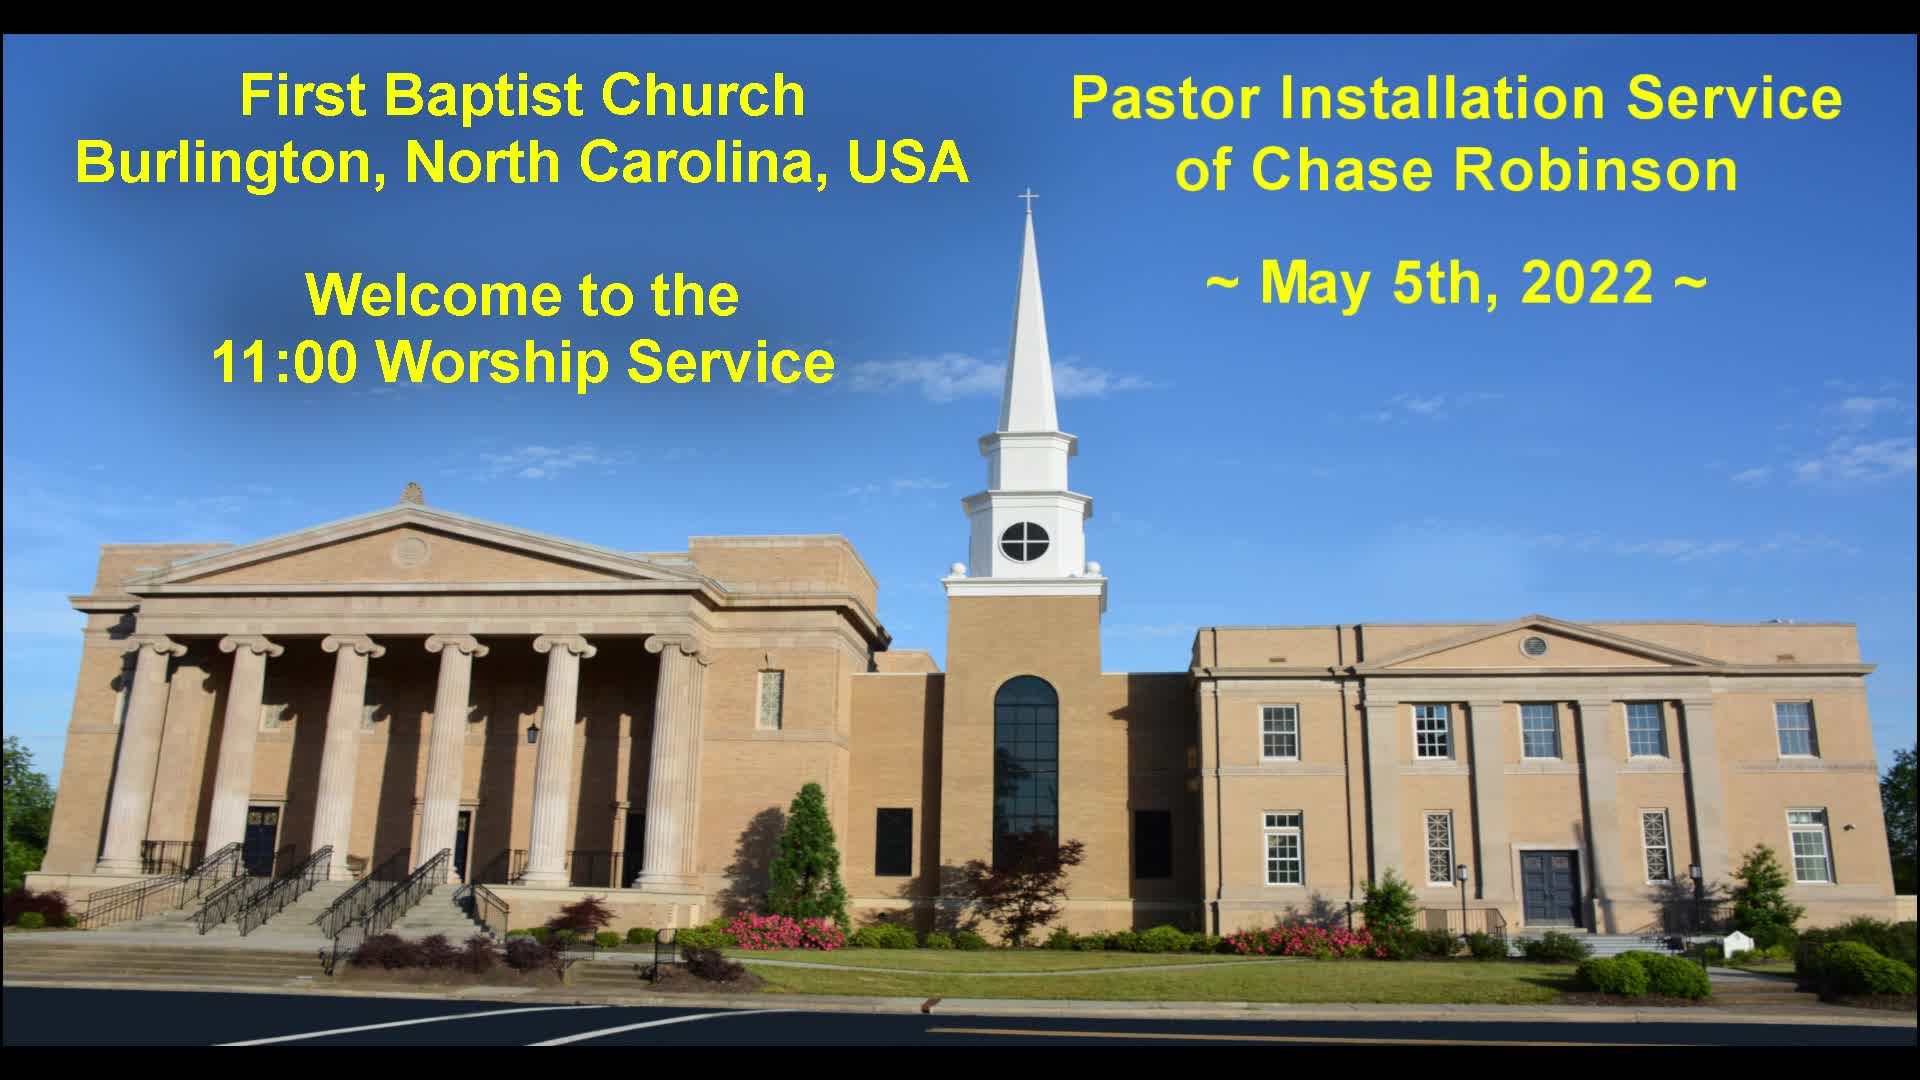 Pastor Installation Service